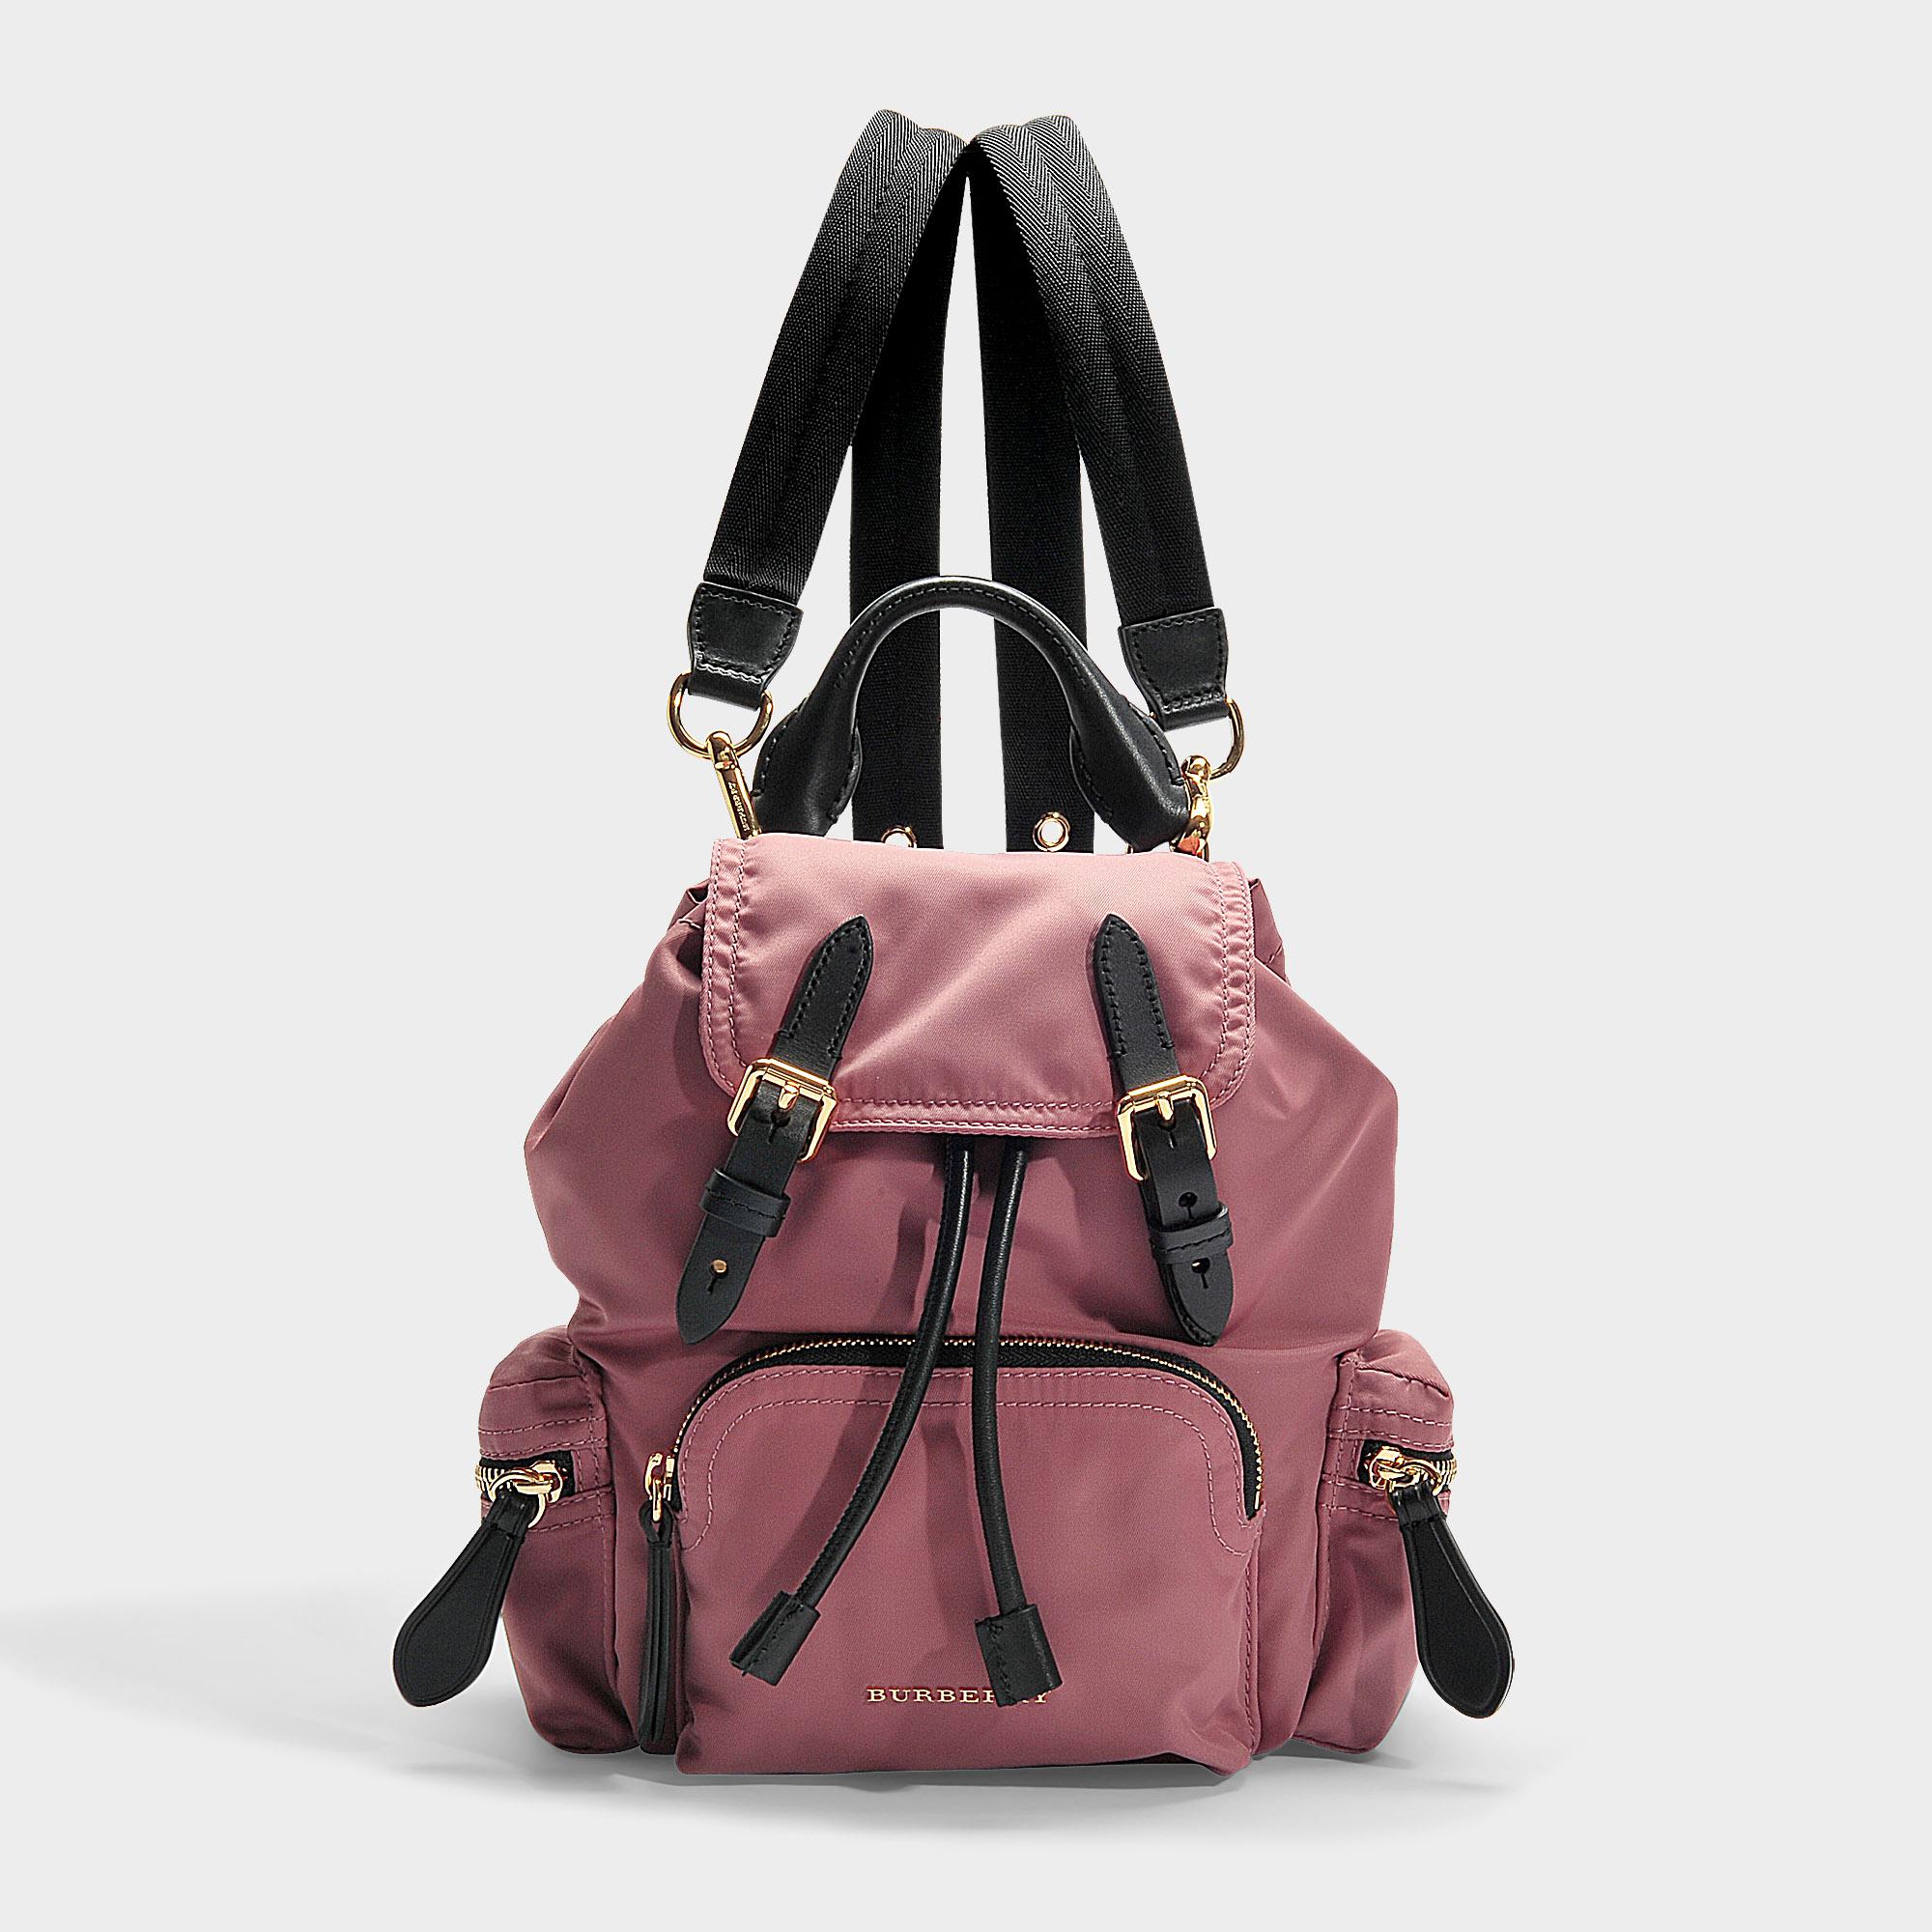 Burberry The Rucksack, pink nylon backpack, Gold tone hardware